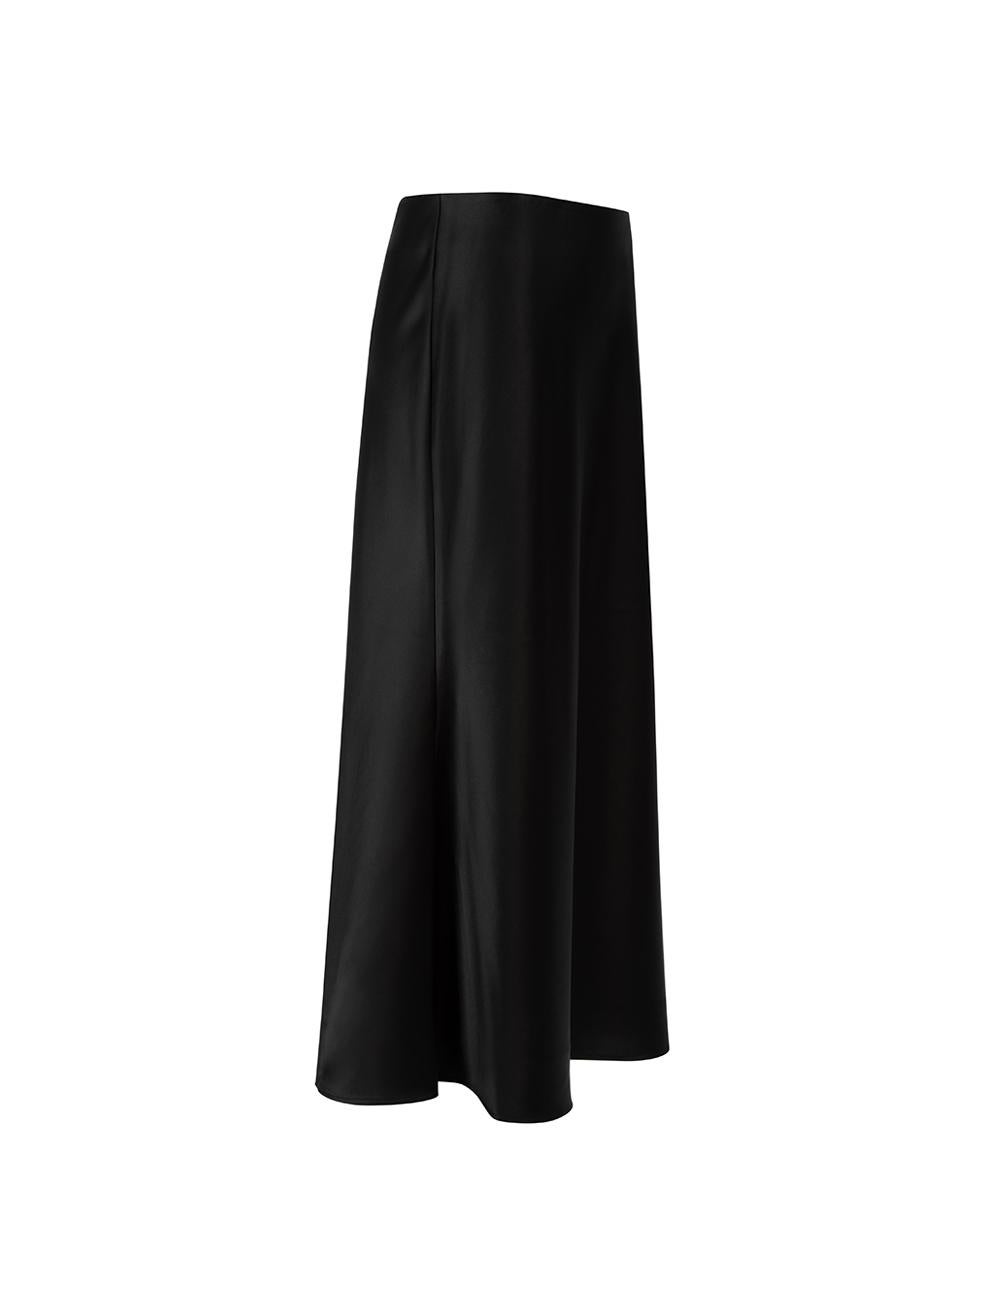 Pre-Loved Totême Women's Black Bias Cut Midi Skirt 1